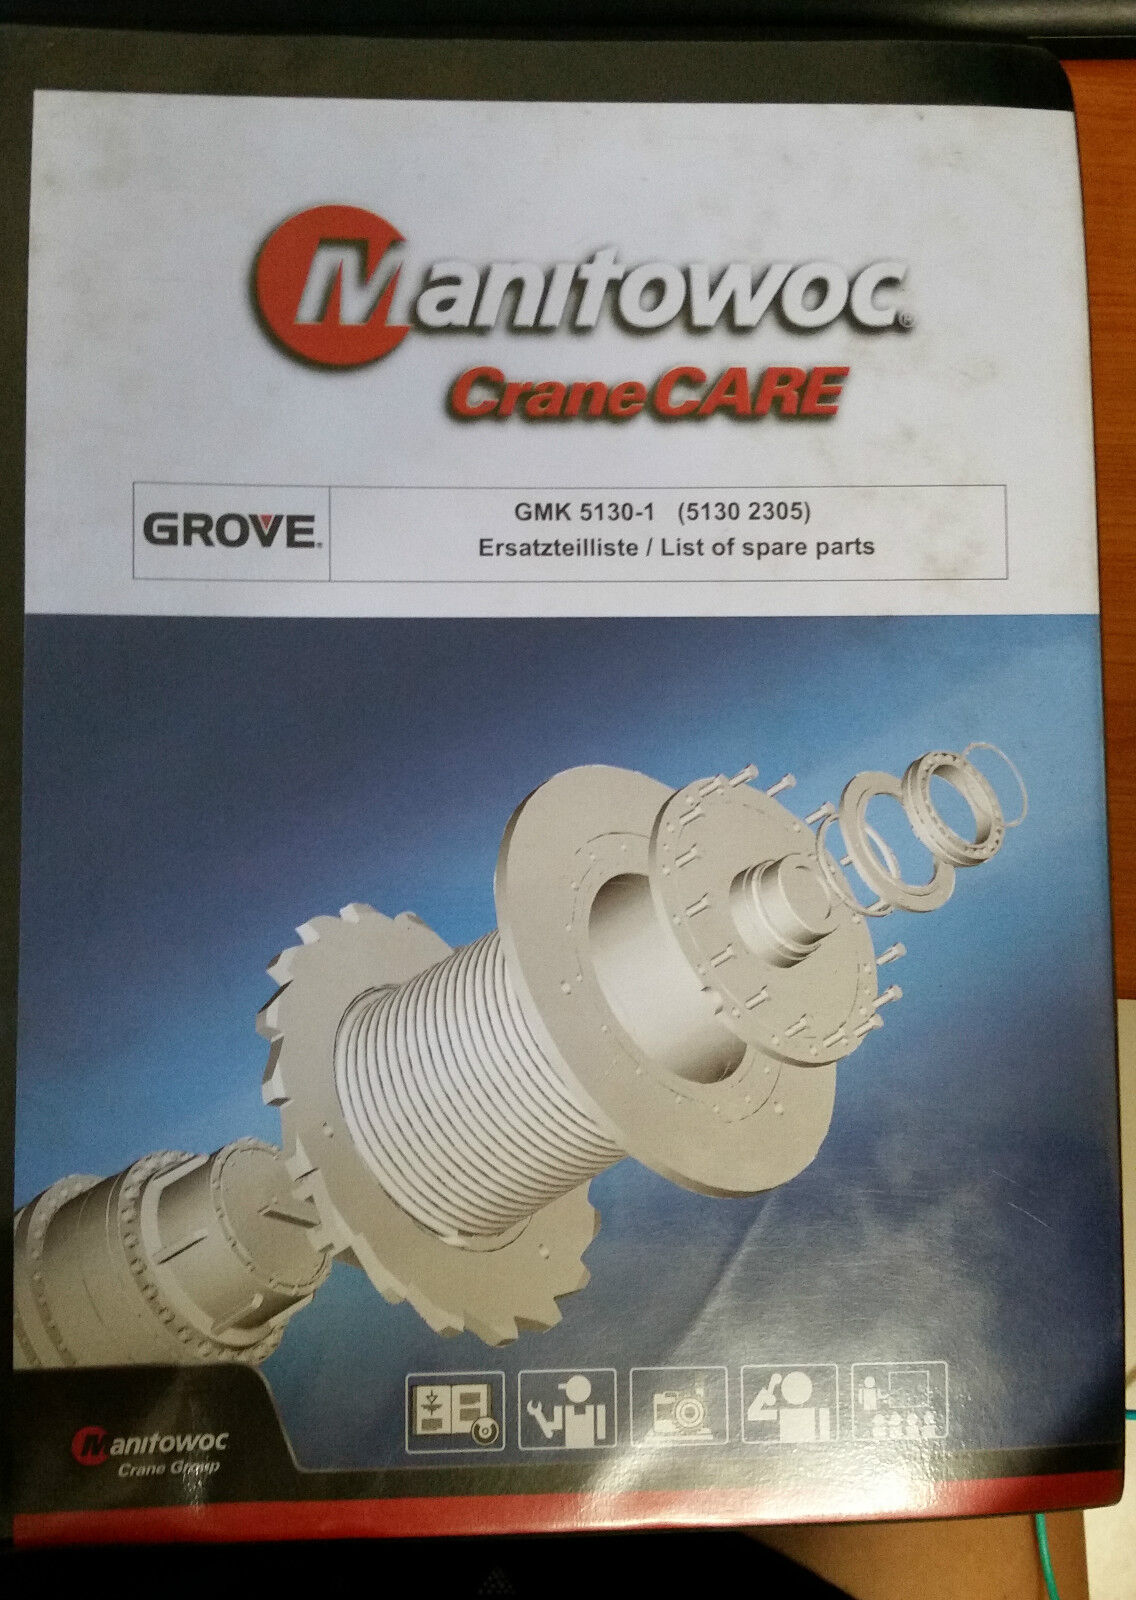 Manitowoc Crane Care GMK 5130-1 (5130 2305) List of Spare Parts Manual